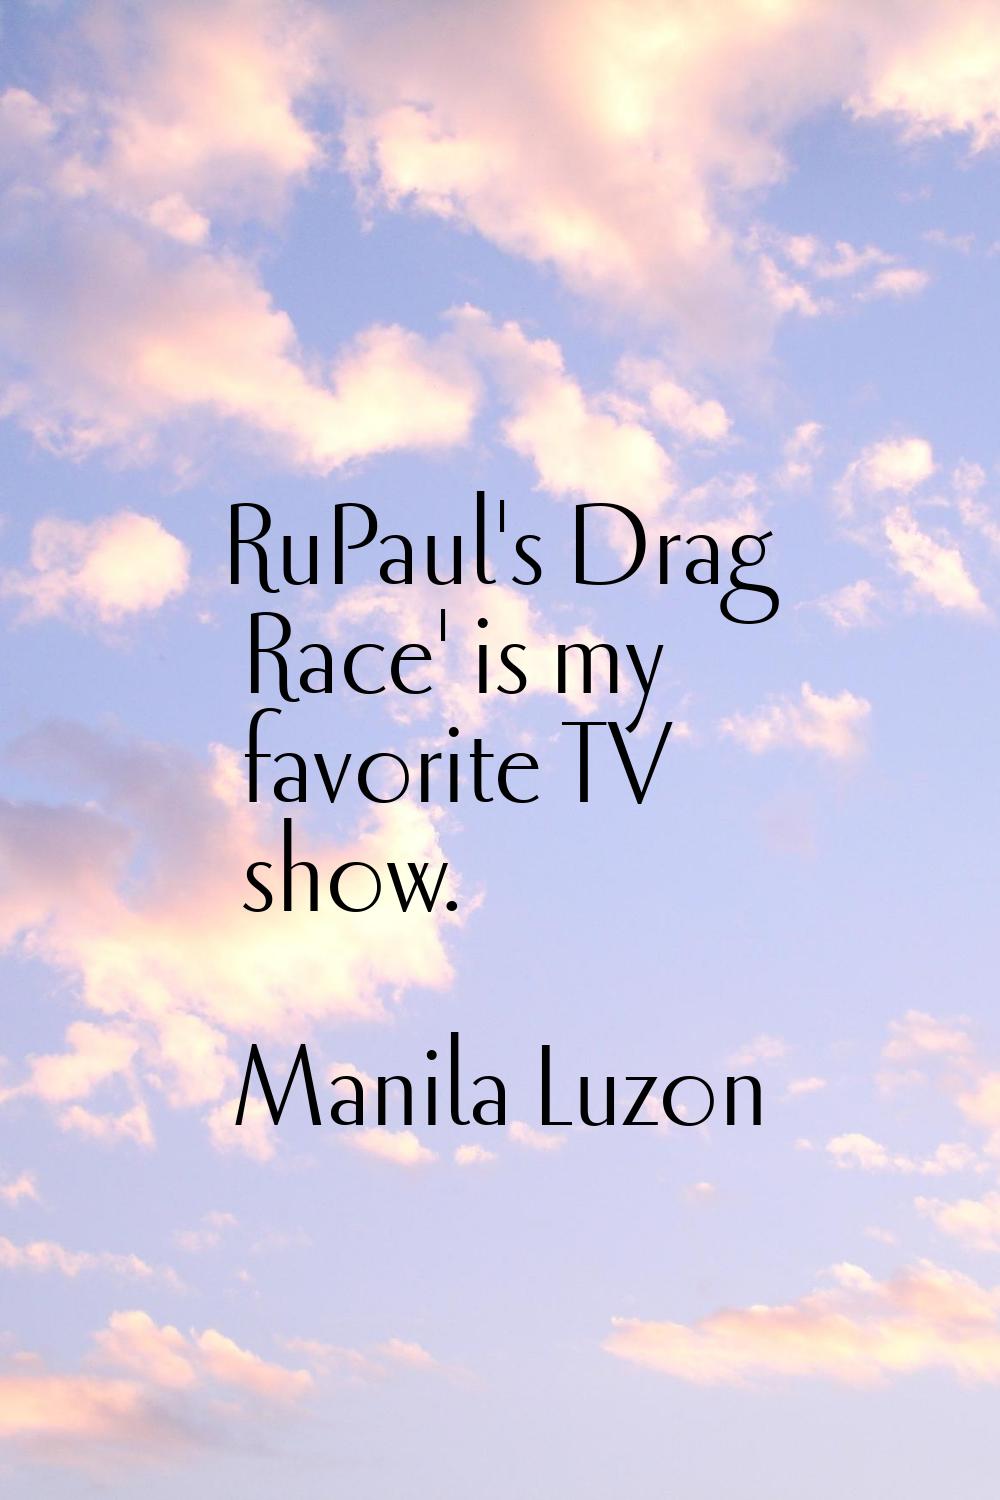 RuPaul's Drag Race' is my favorite TV show.